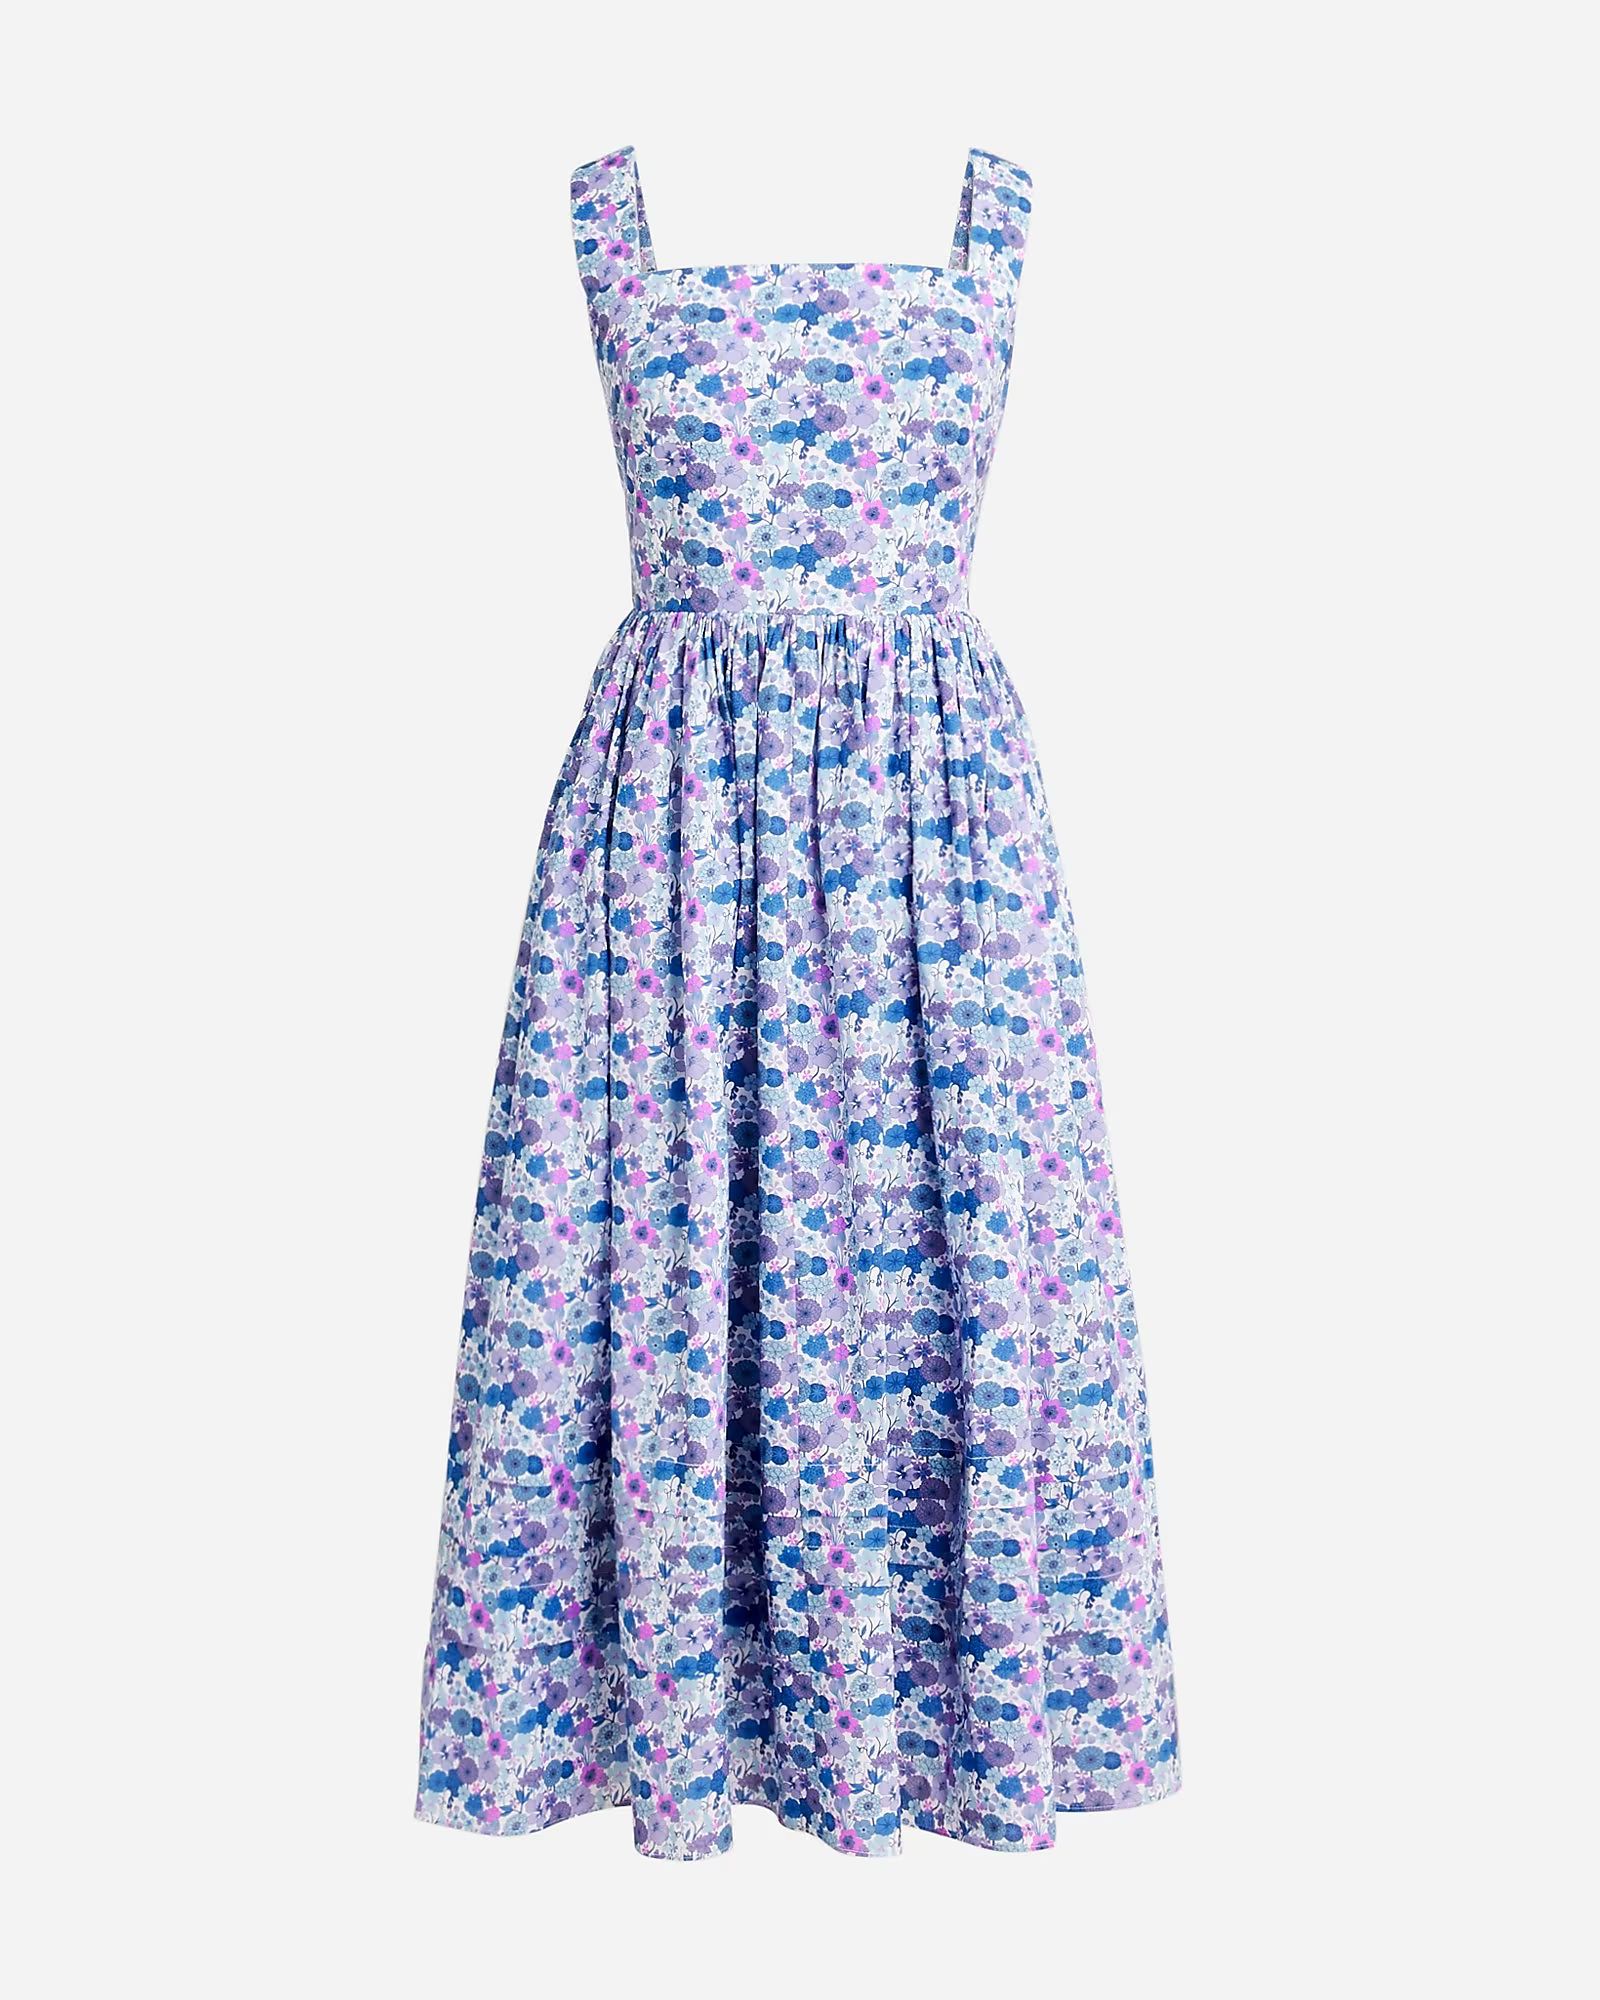 New apron dress in Liberty® Arrow Floral fabric | J.Crew US